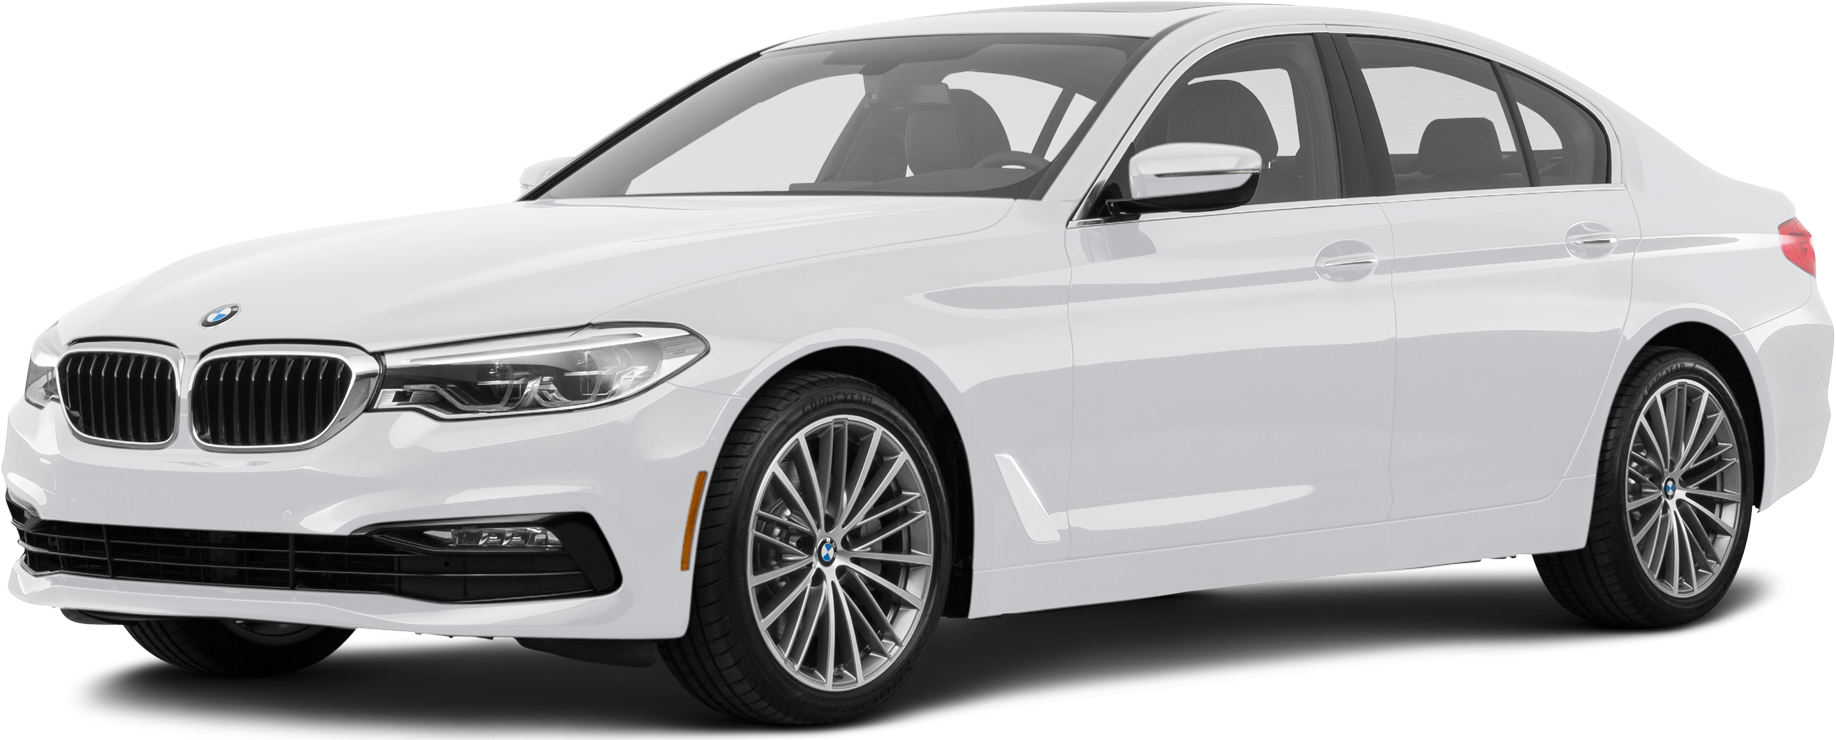 2020 BMW 5 Series Price, Value, Ratings & Reviews